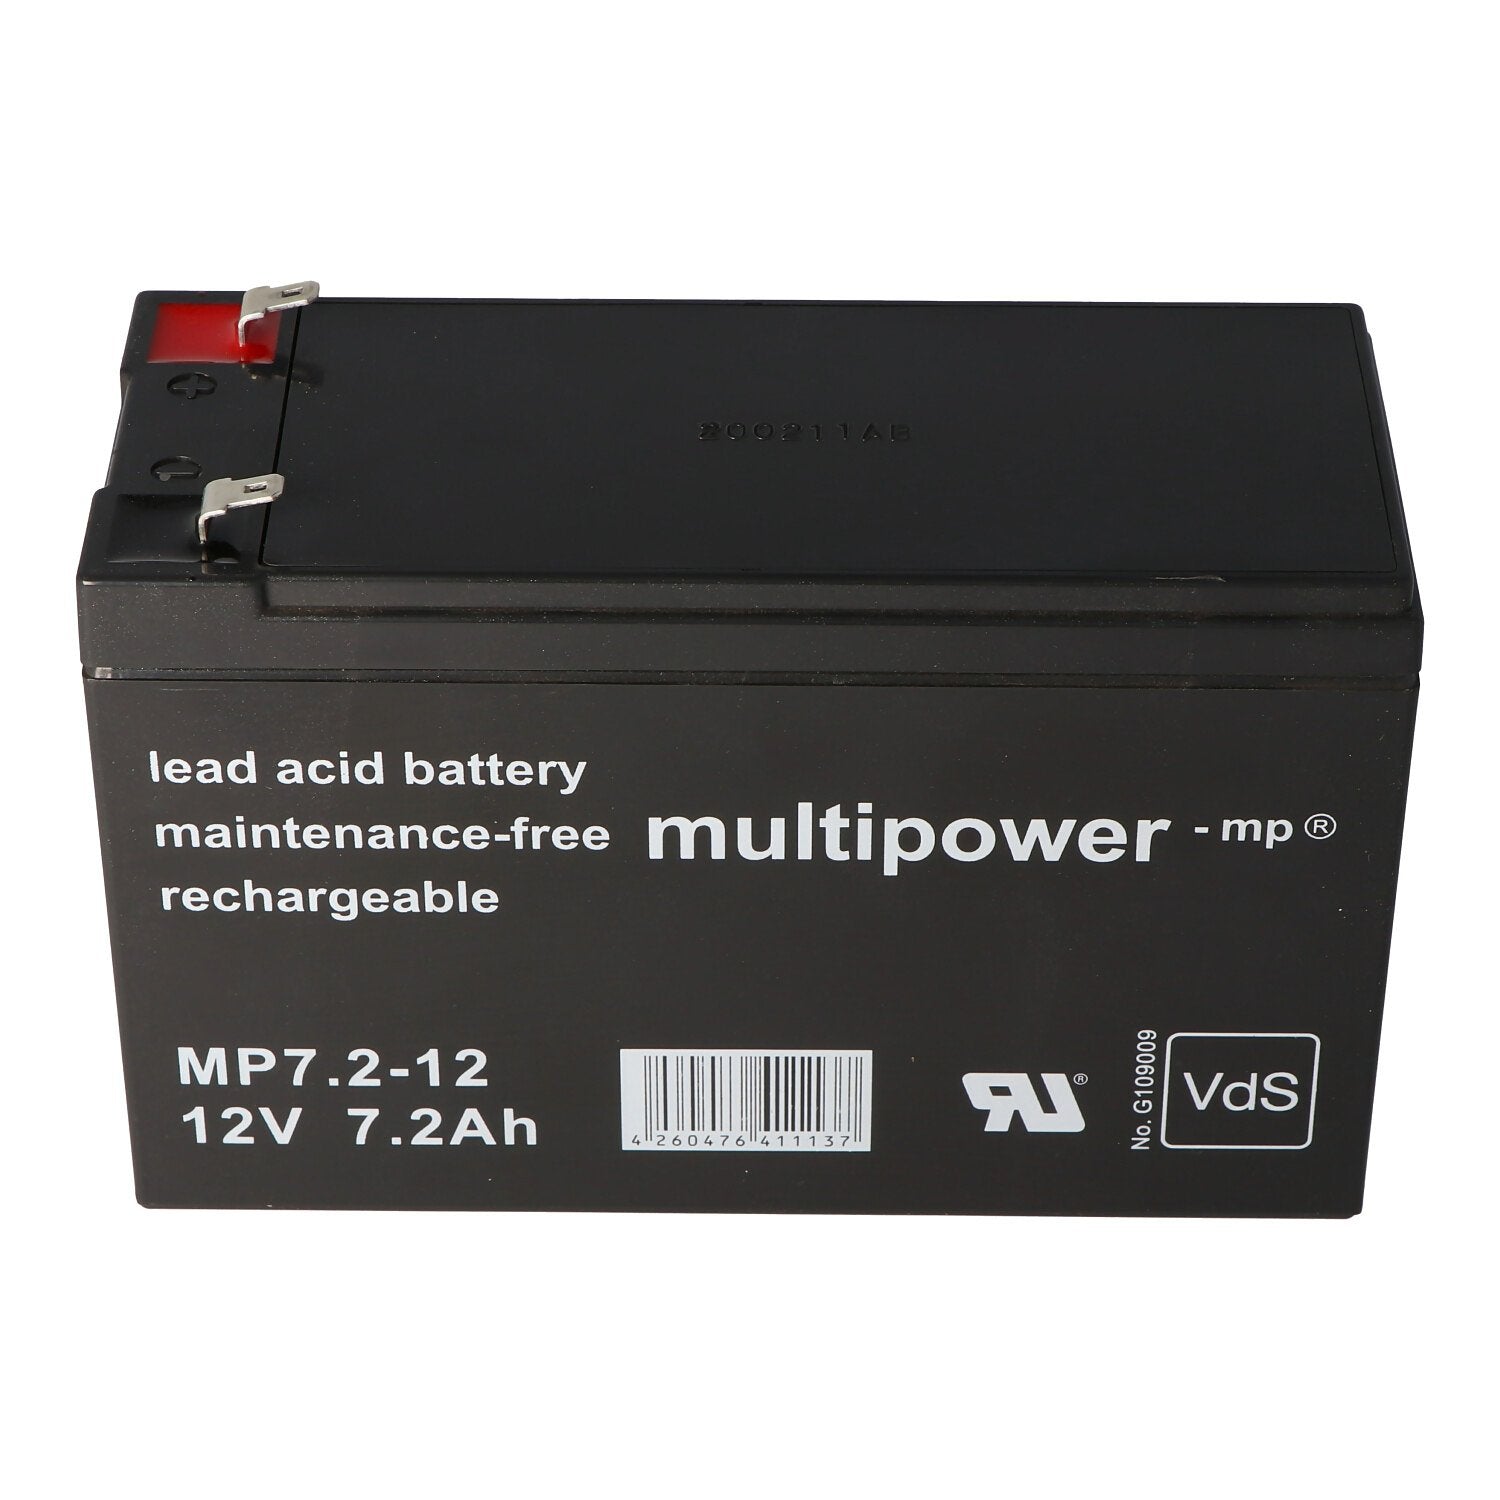 Multipower MP7.2-12 PB battery 12 volt 7.2Ah VDS approval